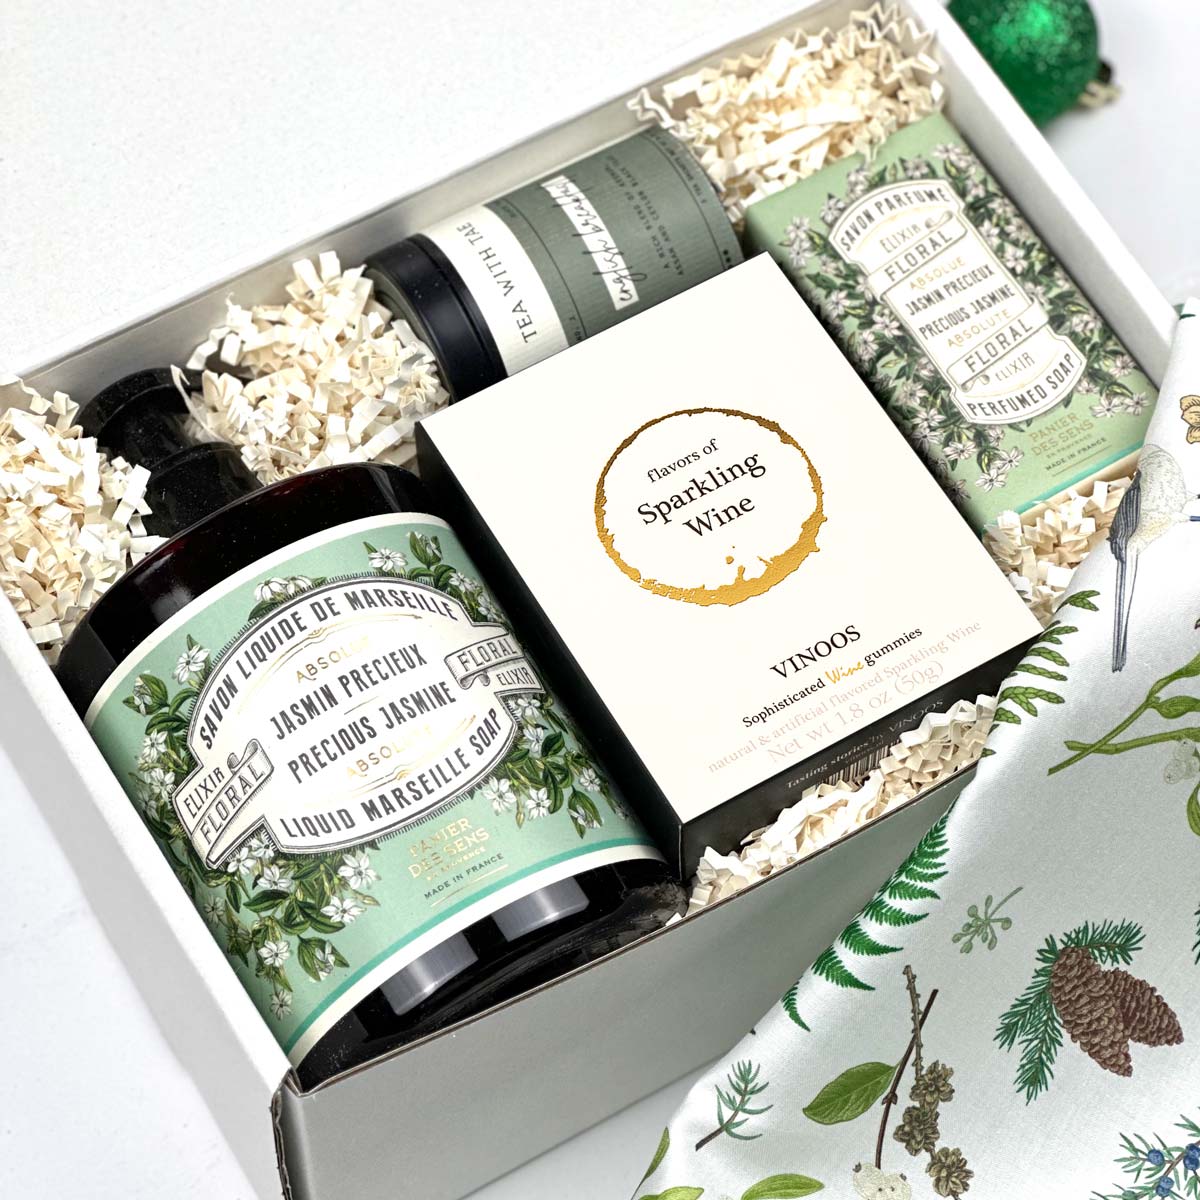 kadoo spa jasmine holiday curated gift box with panier des sens soaps, wine gummy, jasmine tea, and more.